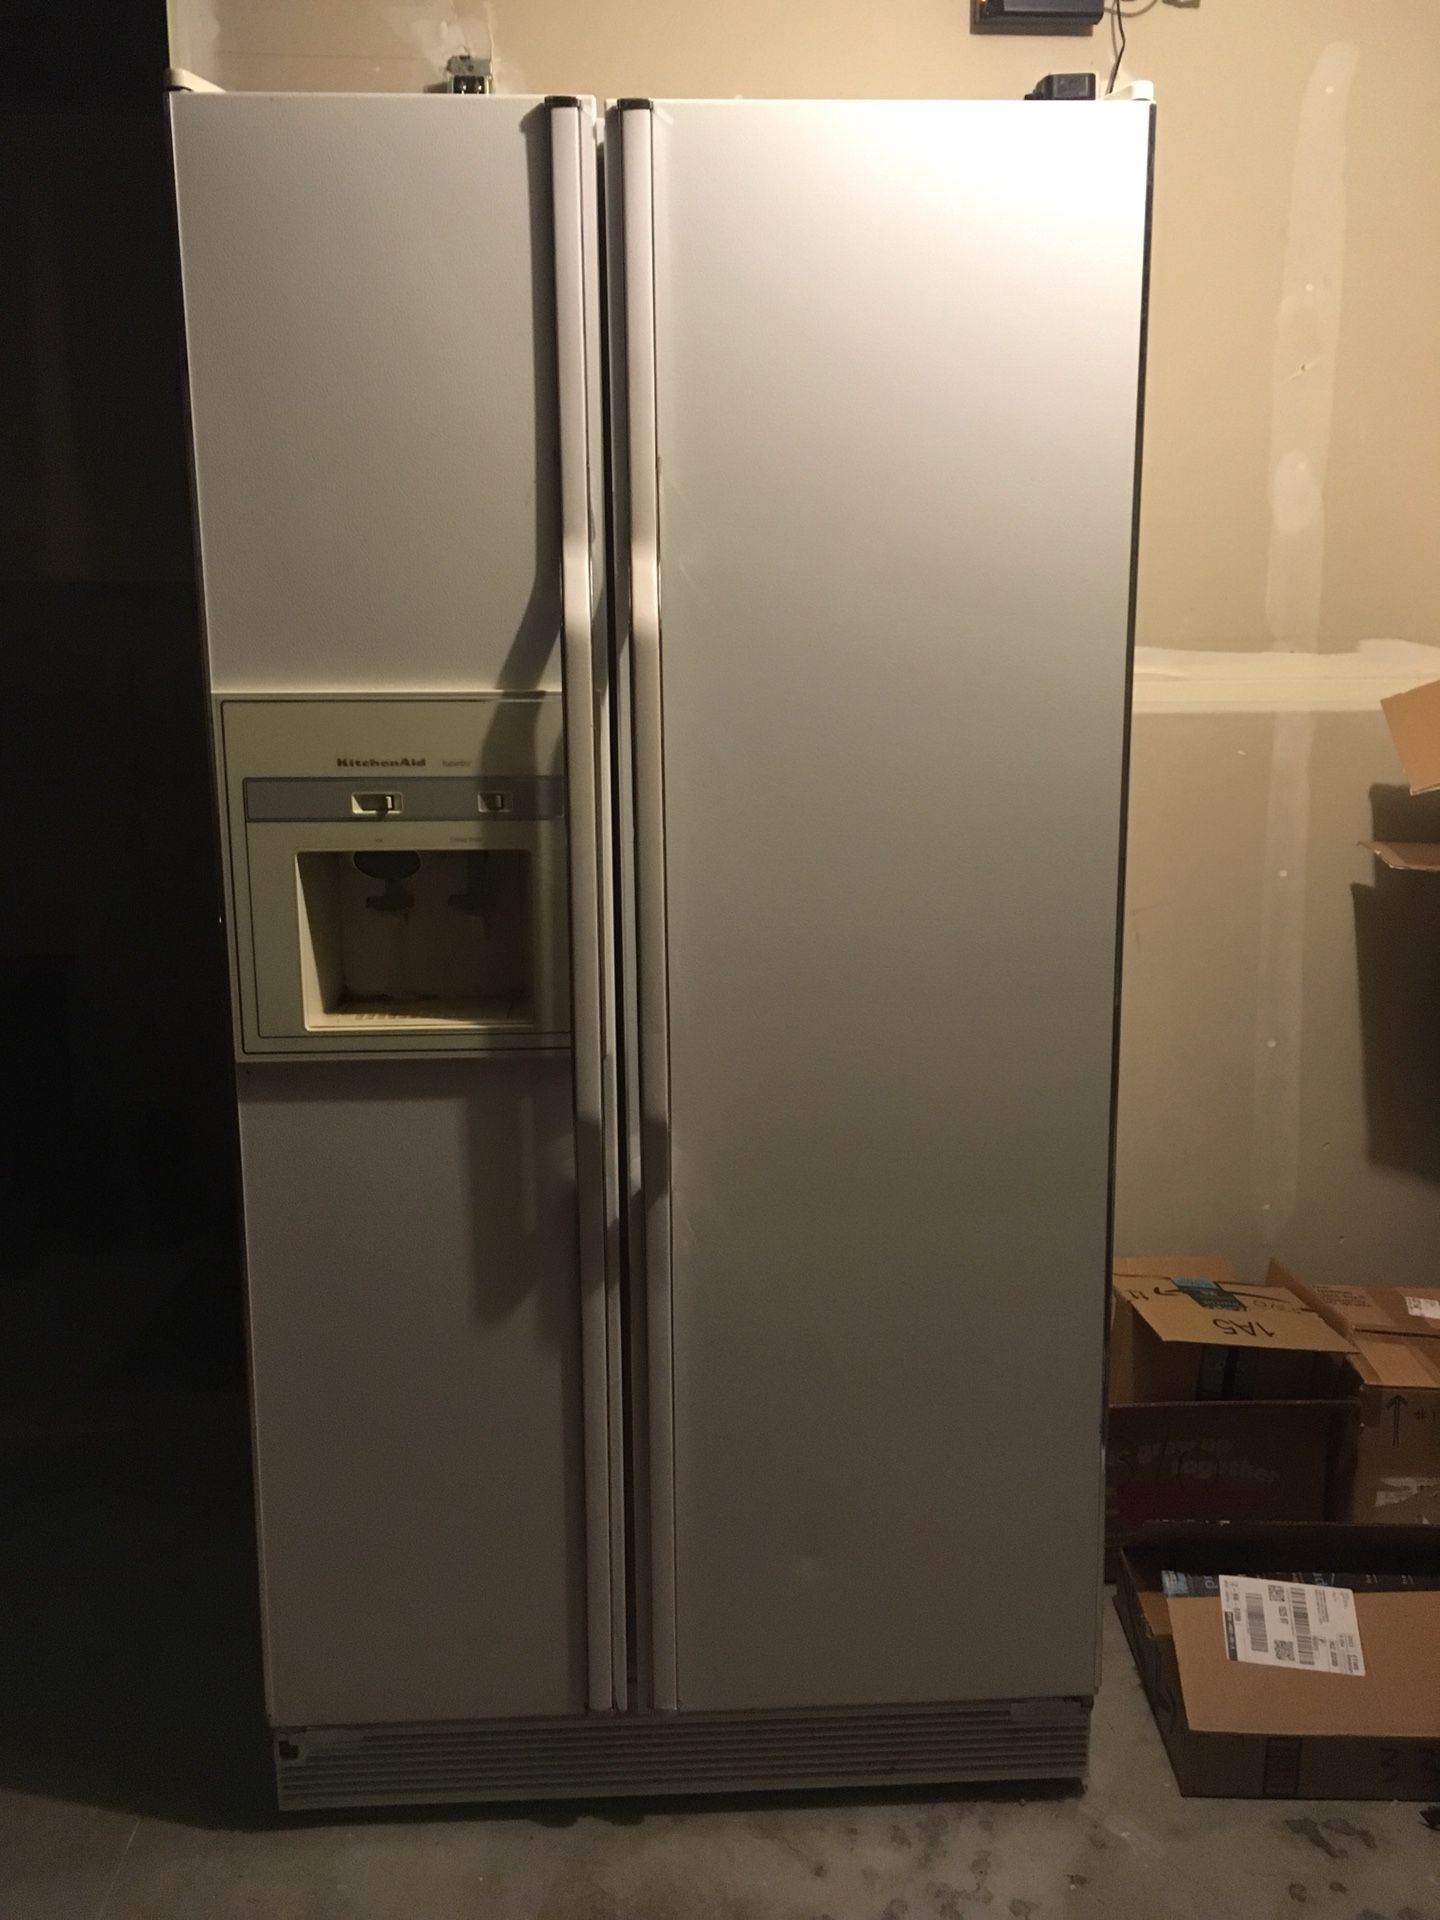 KitchenAid fridge for sale!